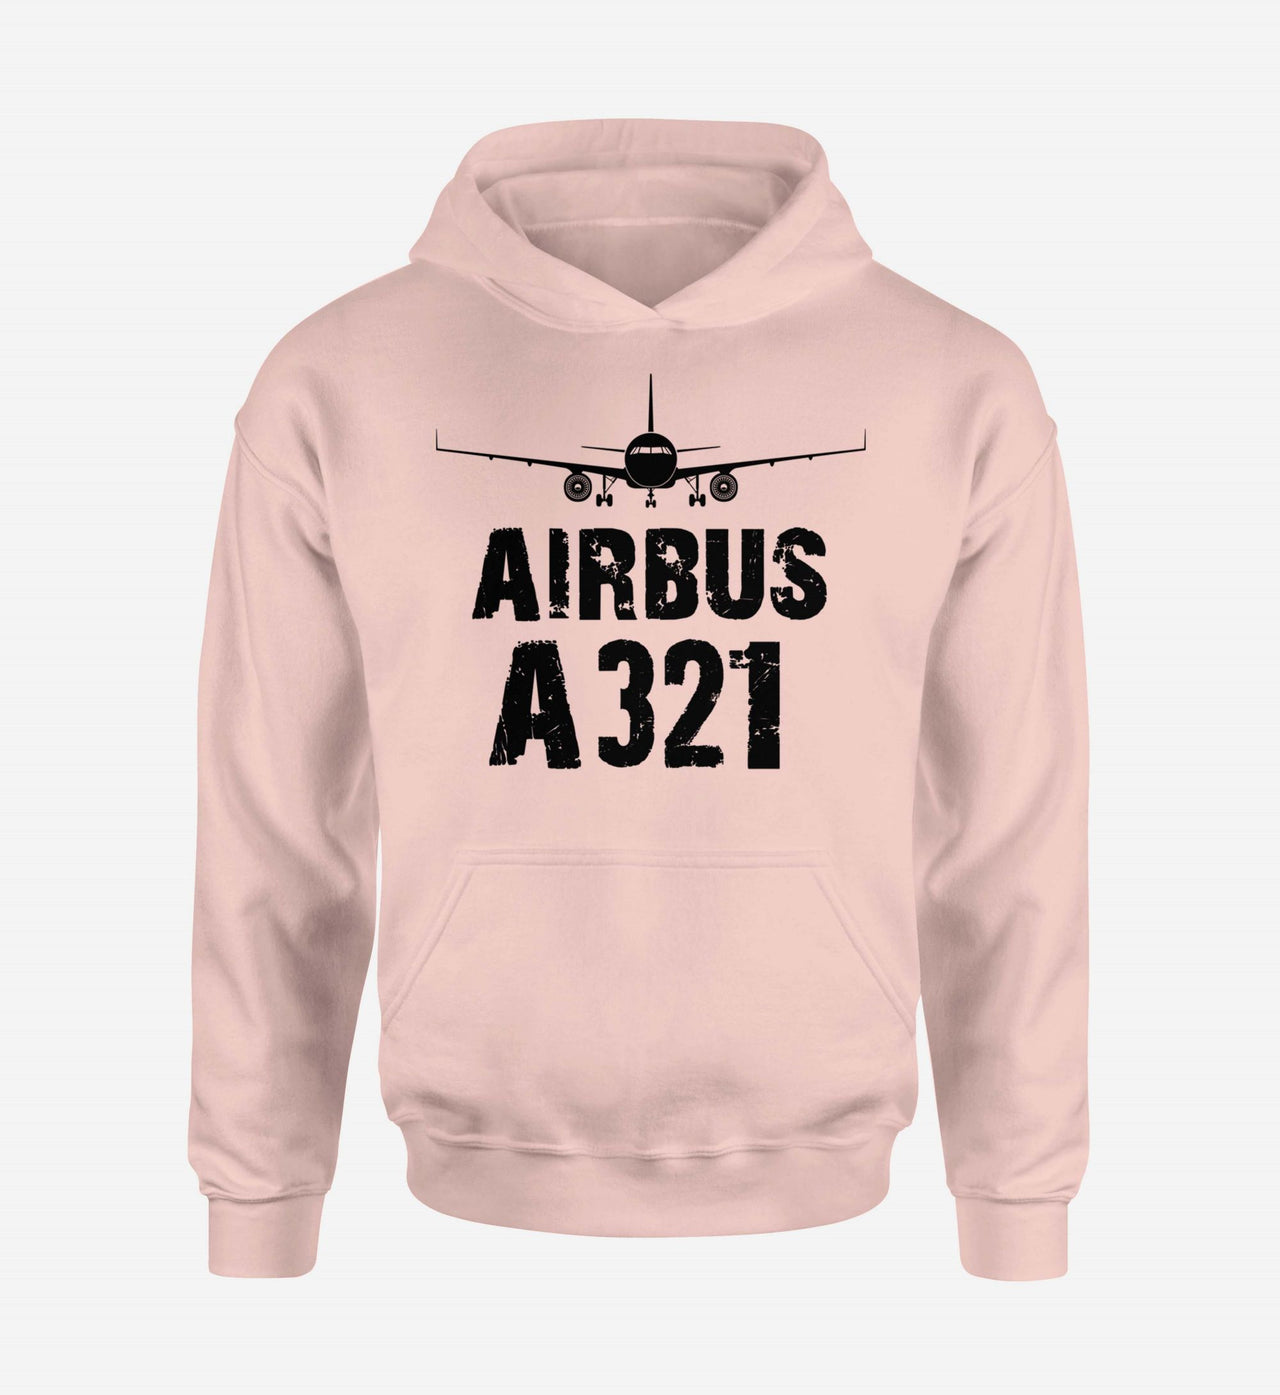 Airbus A321 & Plane Designed Hoodies